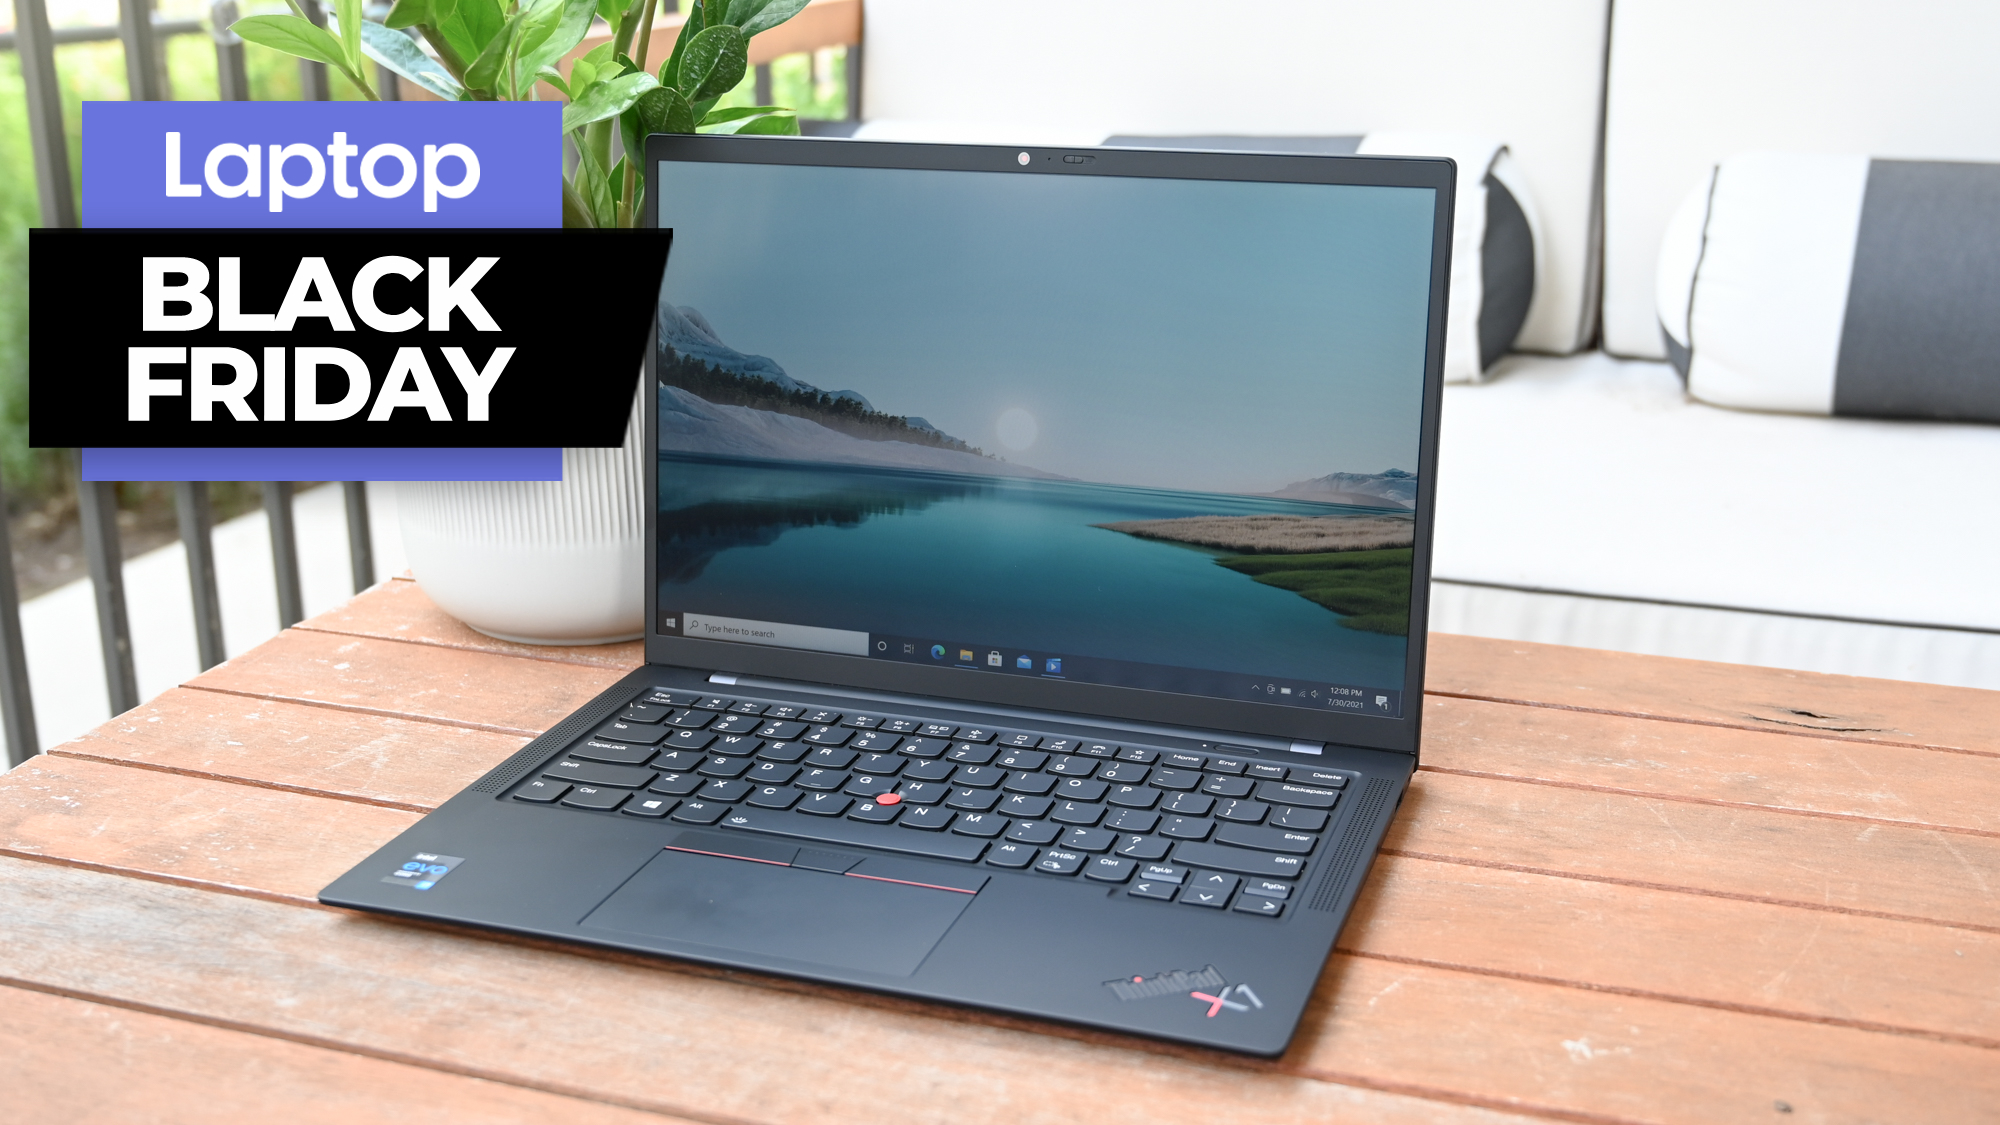 Lenovo ThinkPad X1 Carbon Black Friday deal